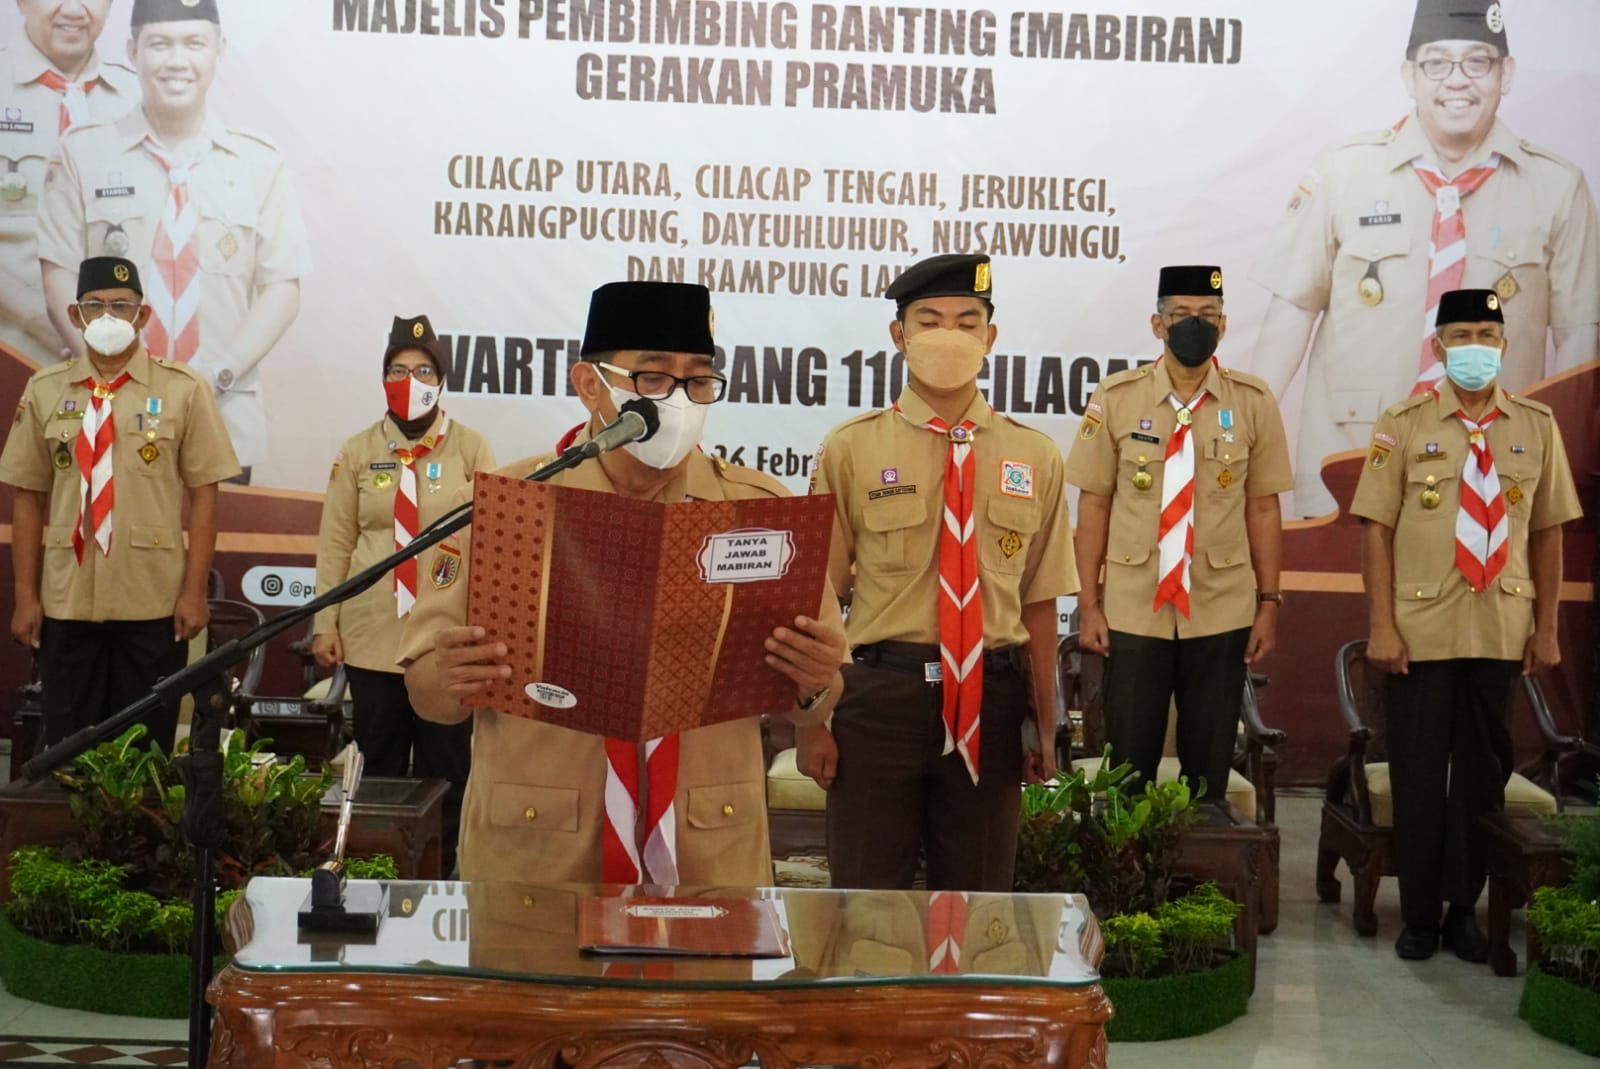 Ketua Kwarcab lantik tujuh Ketua Majelis Pembimbing Ranting di pendopo kabupaten cilacap